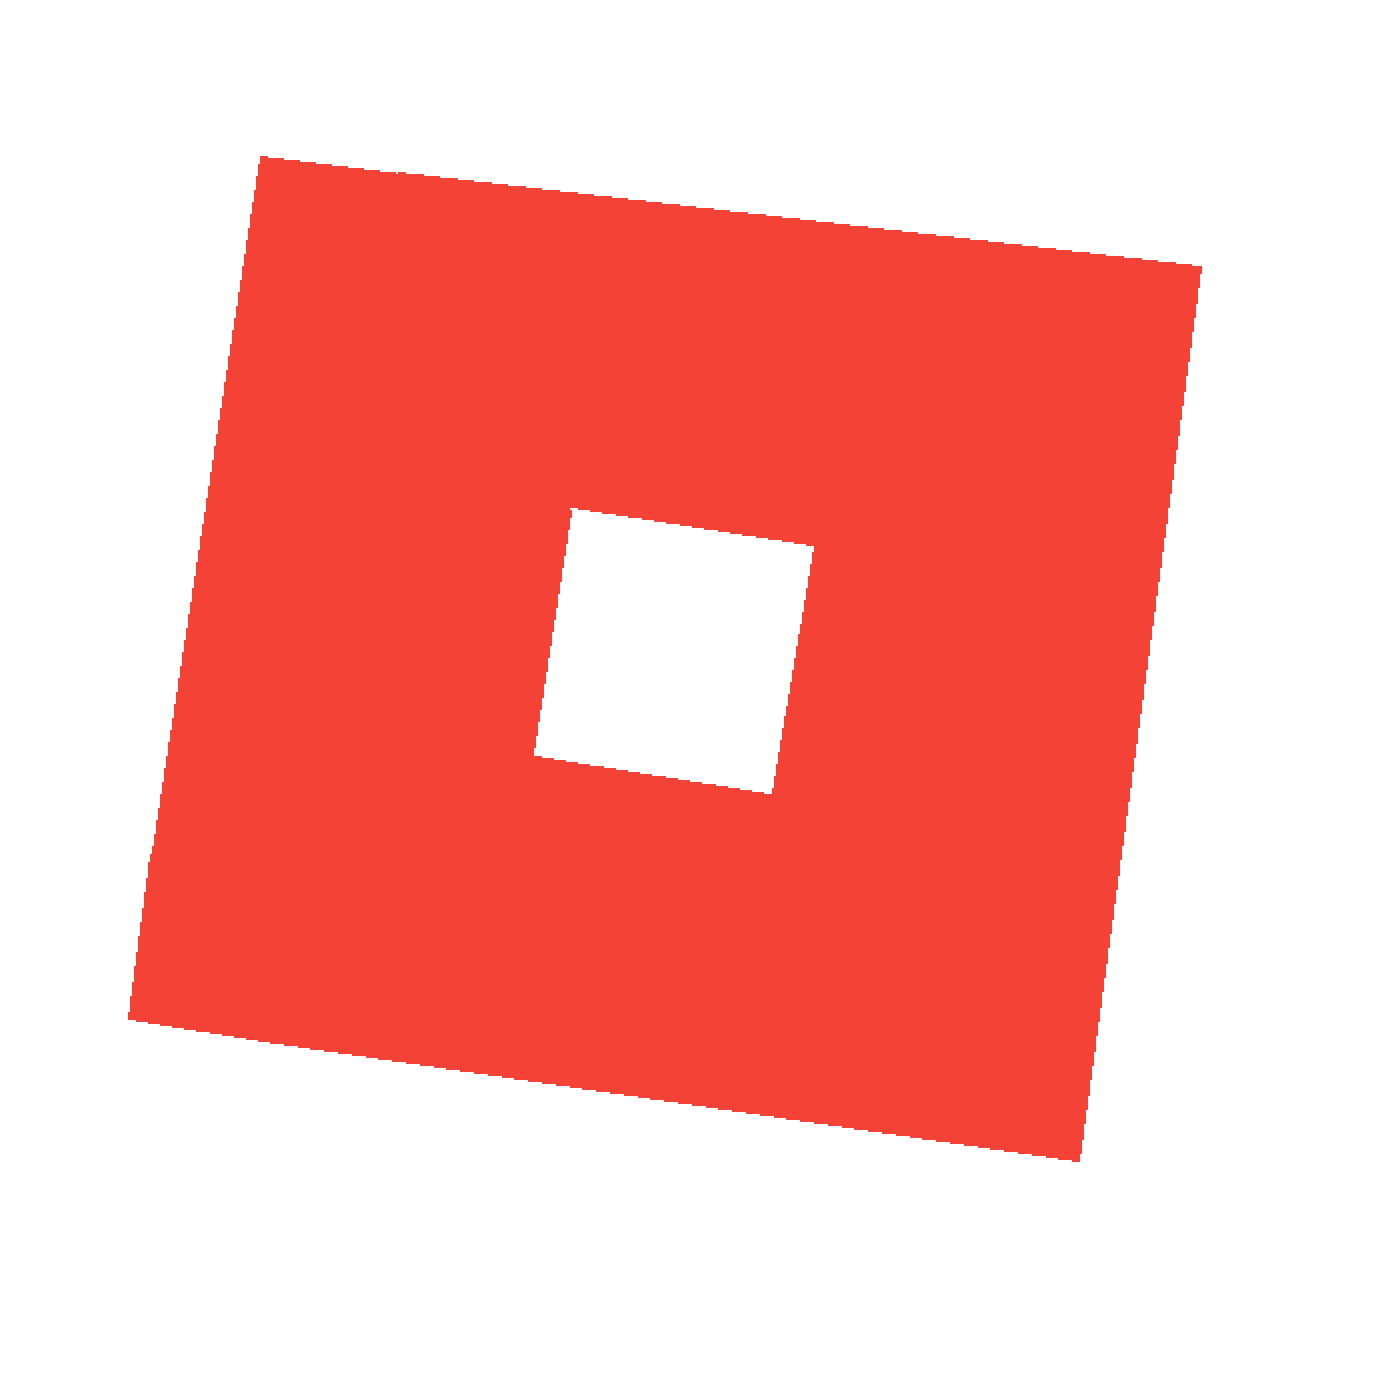 Roblox Logo Emoji Copy And Paste Free Roblox Gift Card Codes 2019 September Full - pixel art roblox logo 2019